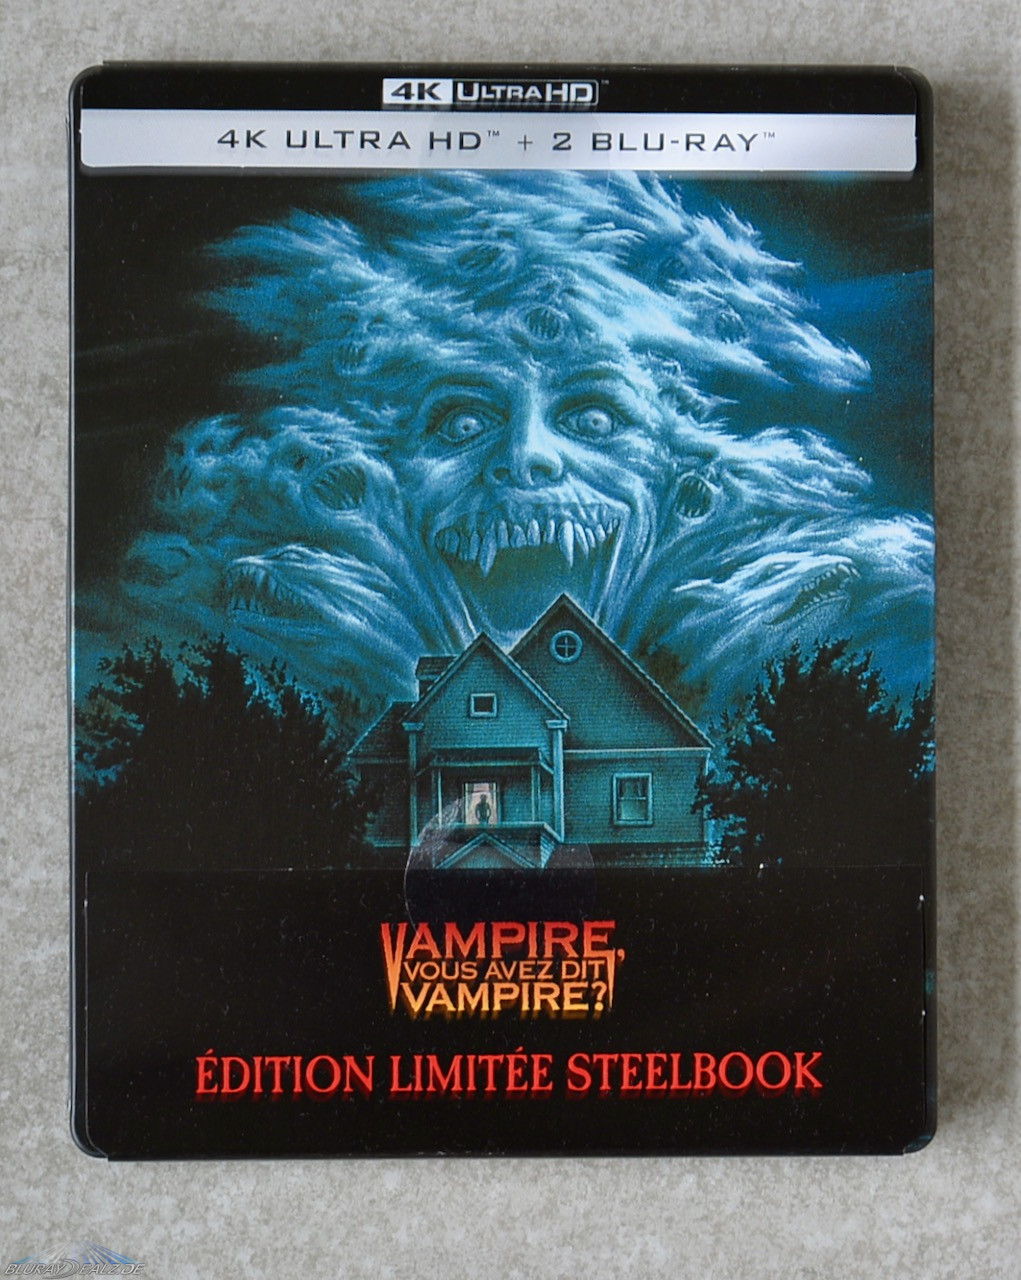 Review] Fright Night Steelbook (4K UHD, Blu-ray und Bonusdisc) › Bluray -Dealz.de